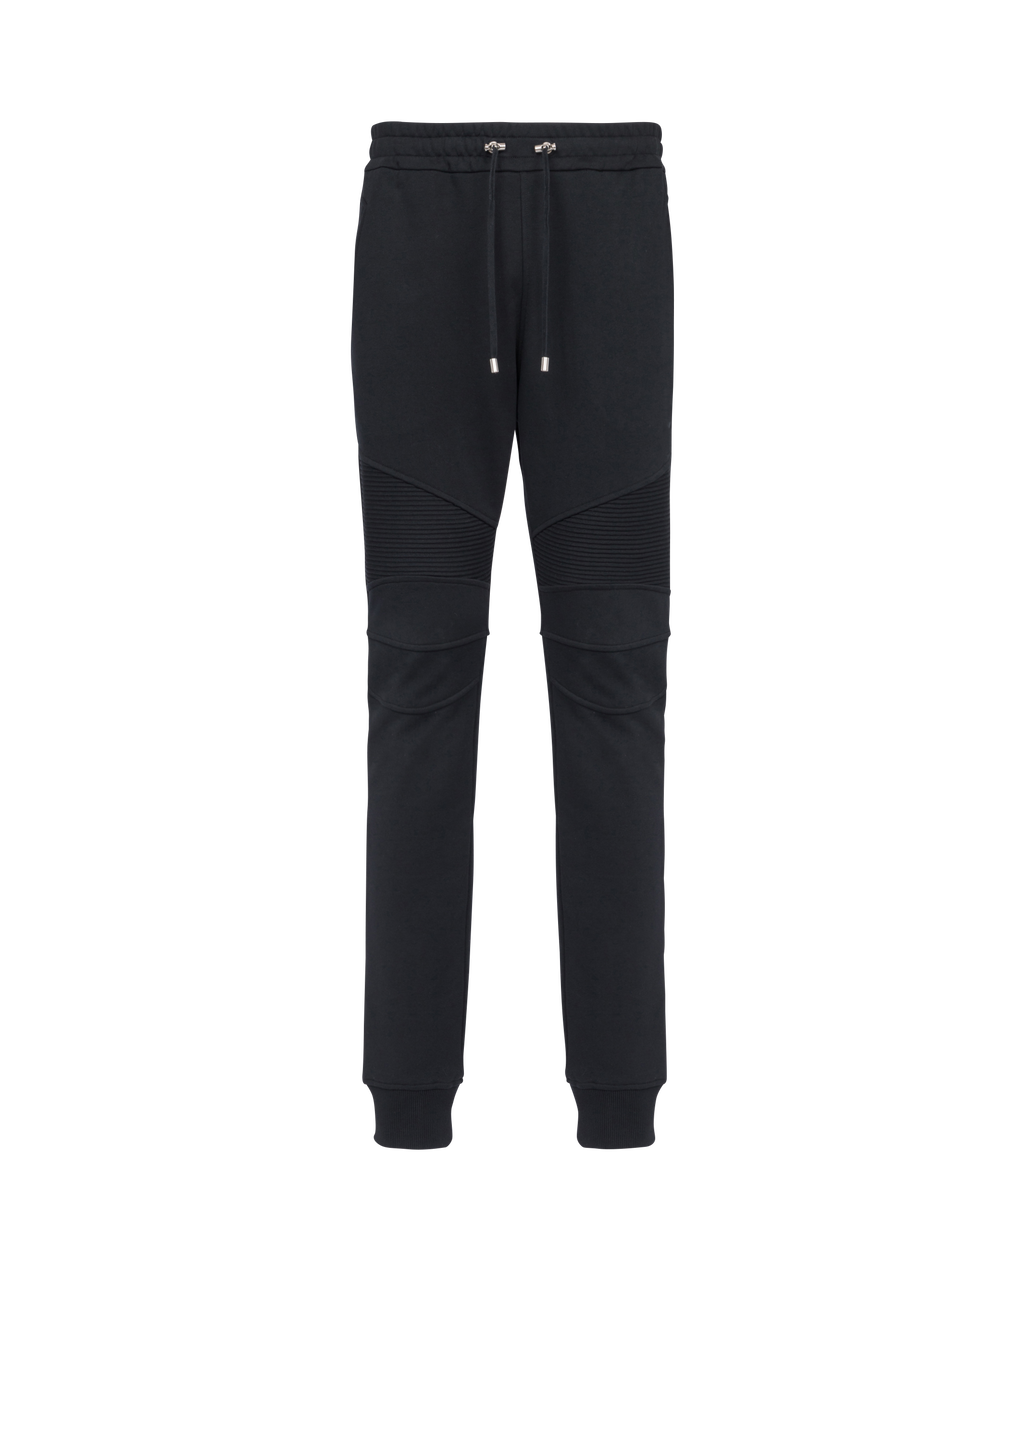 Pantalon de jogging en coton floqué logo Balmain Paris, noir, hi-res